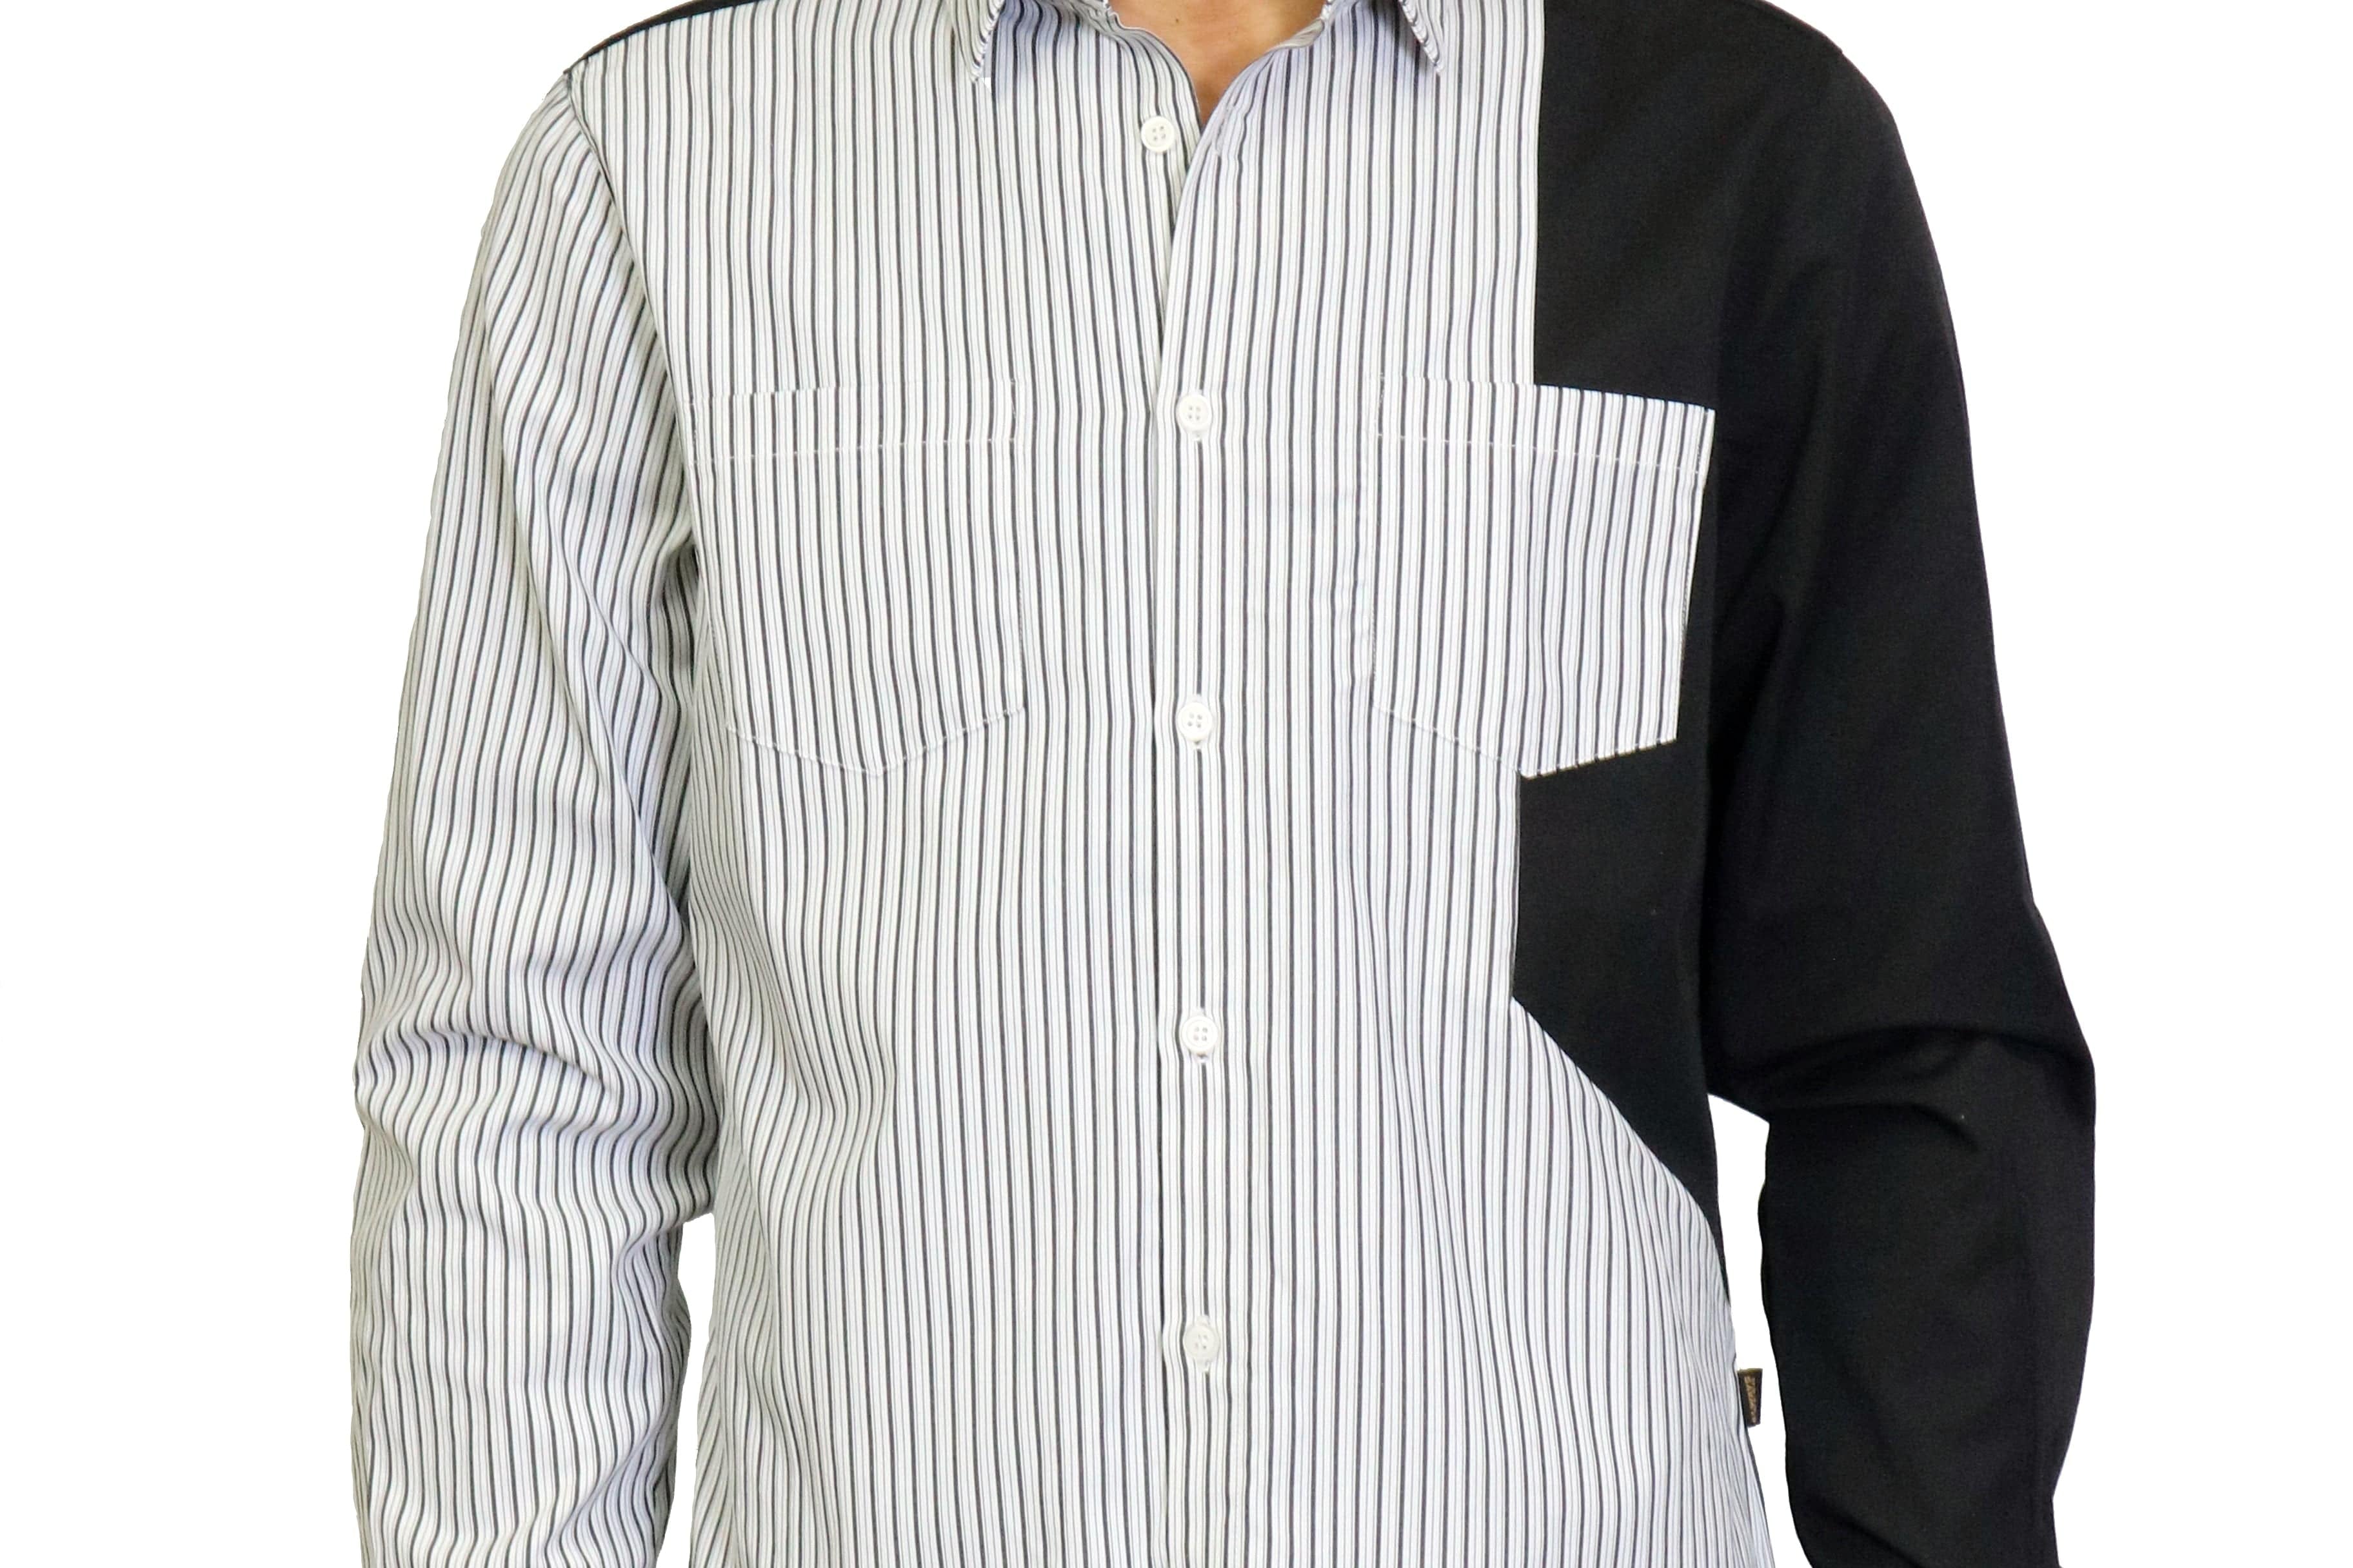 KLEEP Men's Shirt Kao Men's premium pinstripe button down shirt